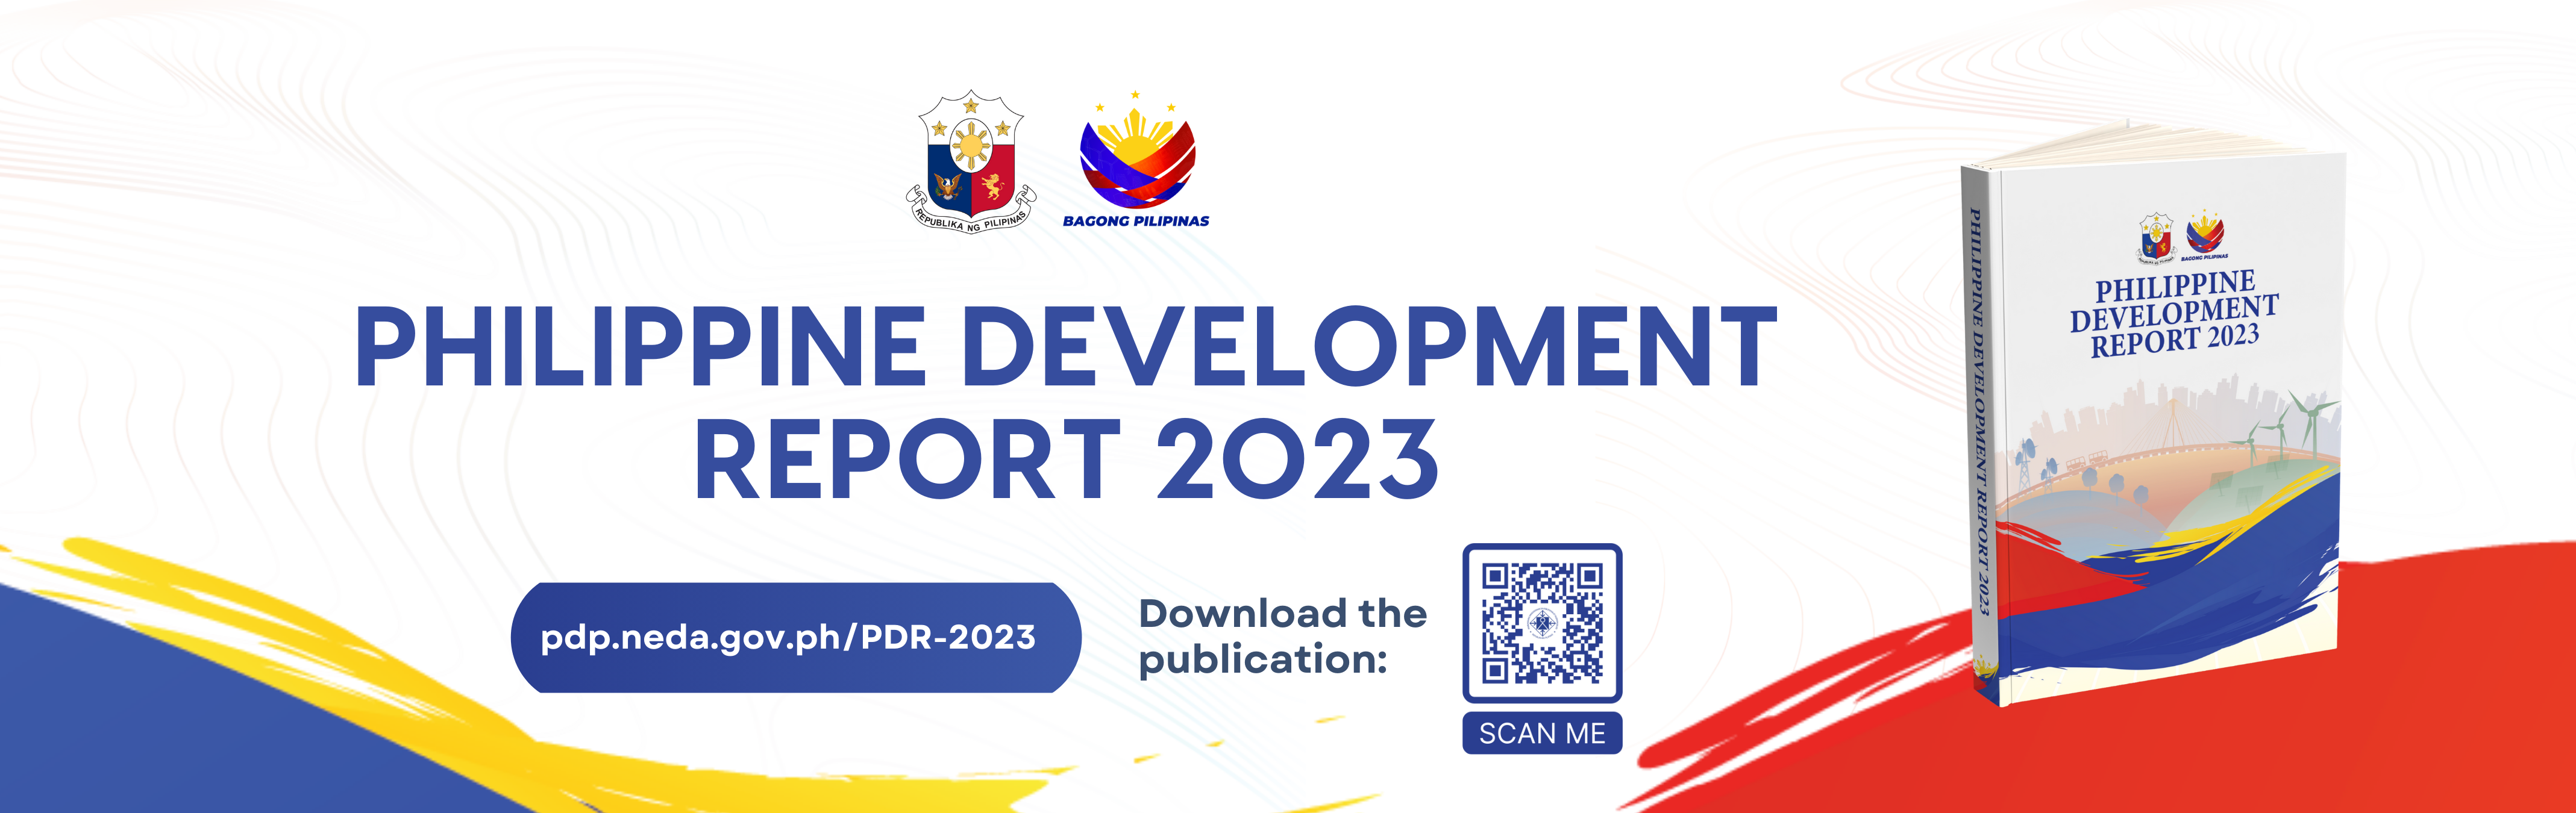 Philippine Development Report 2023 (Official Banner)